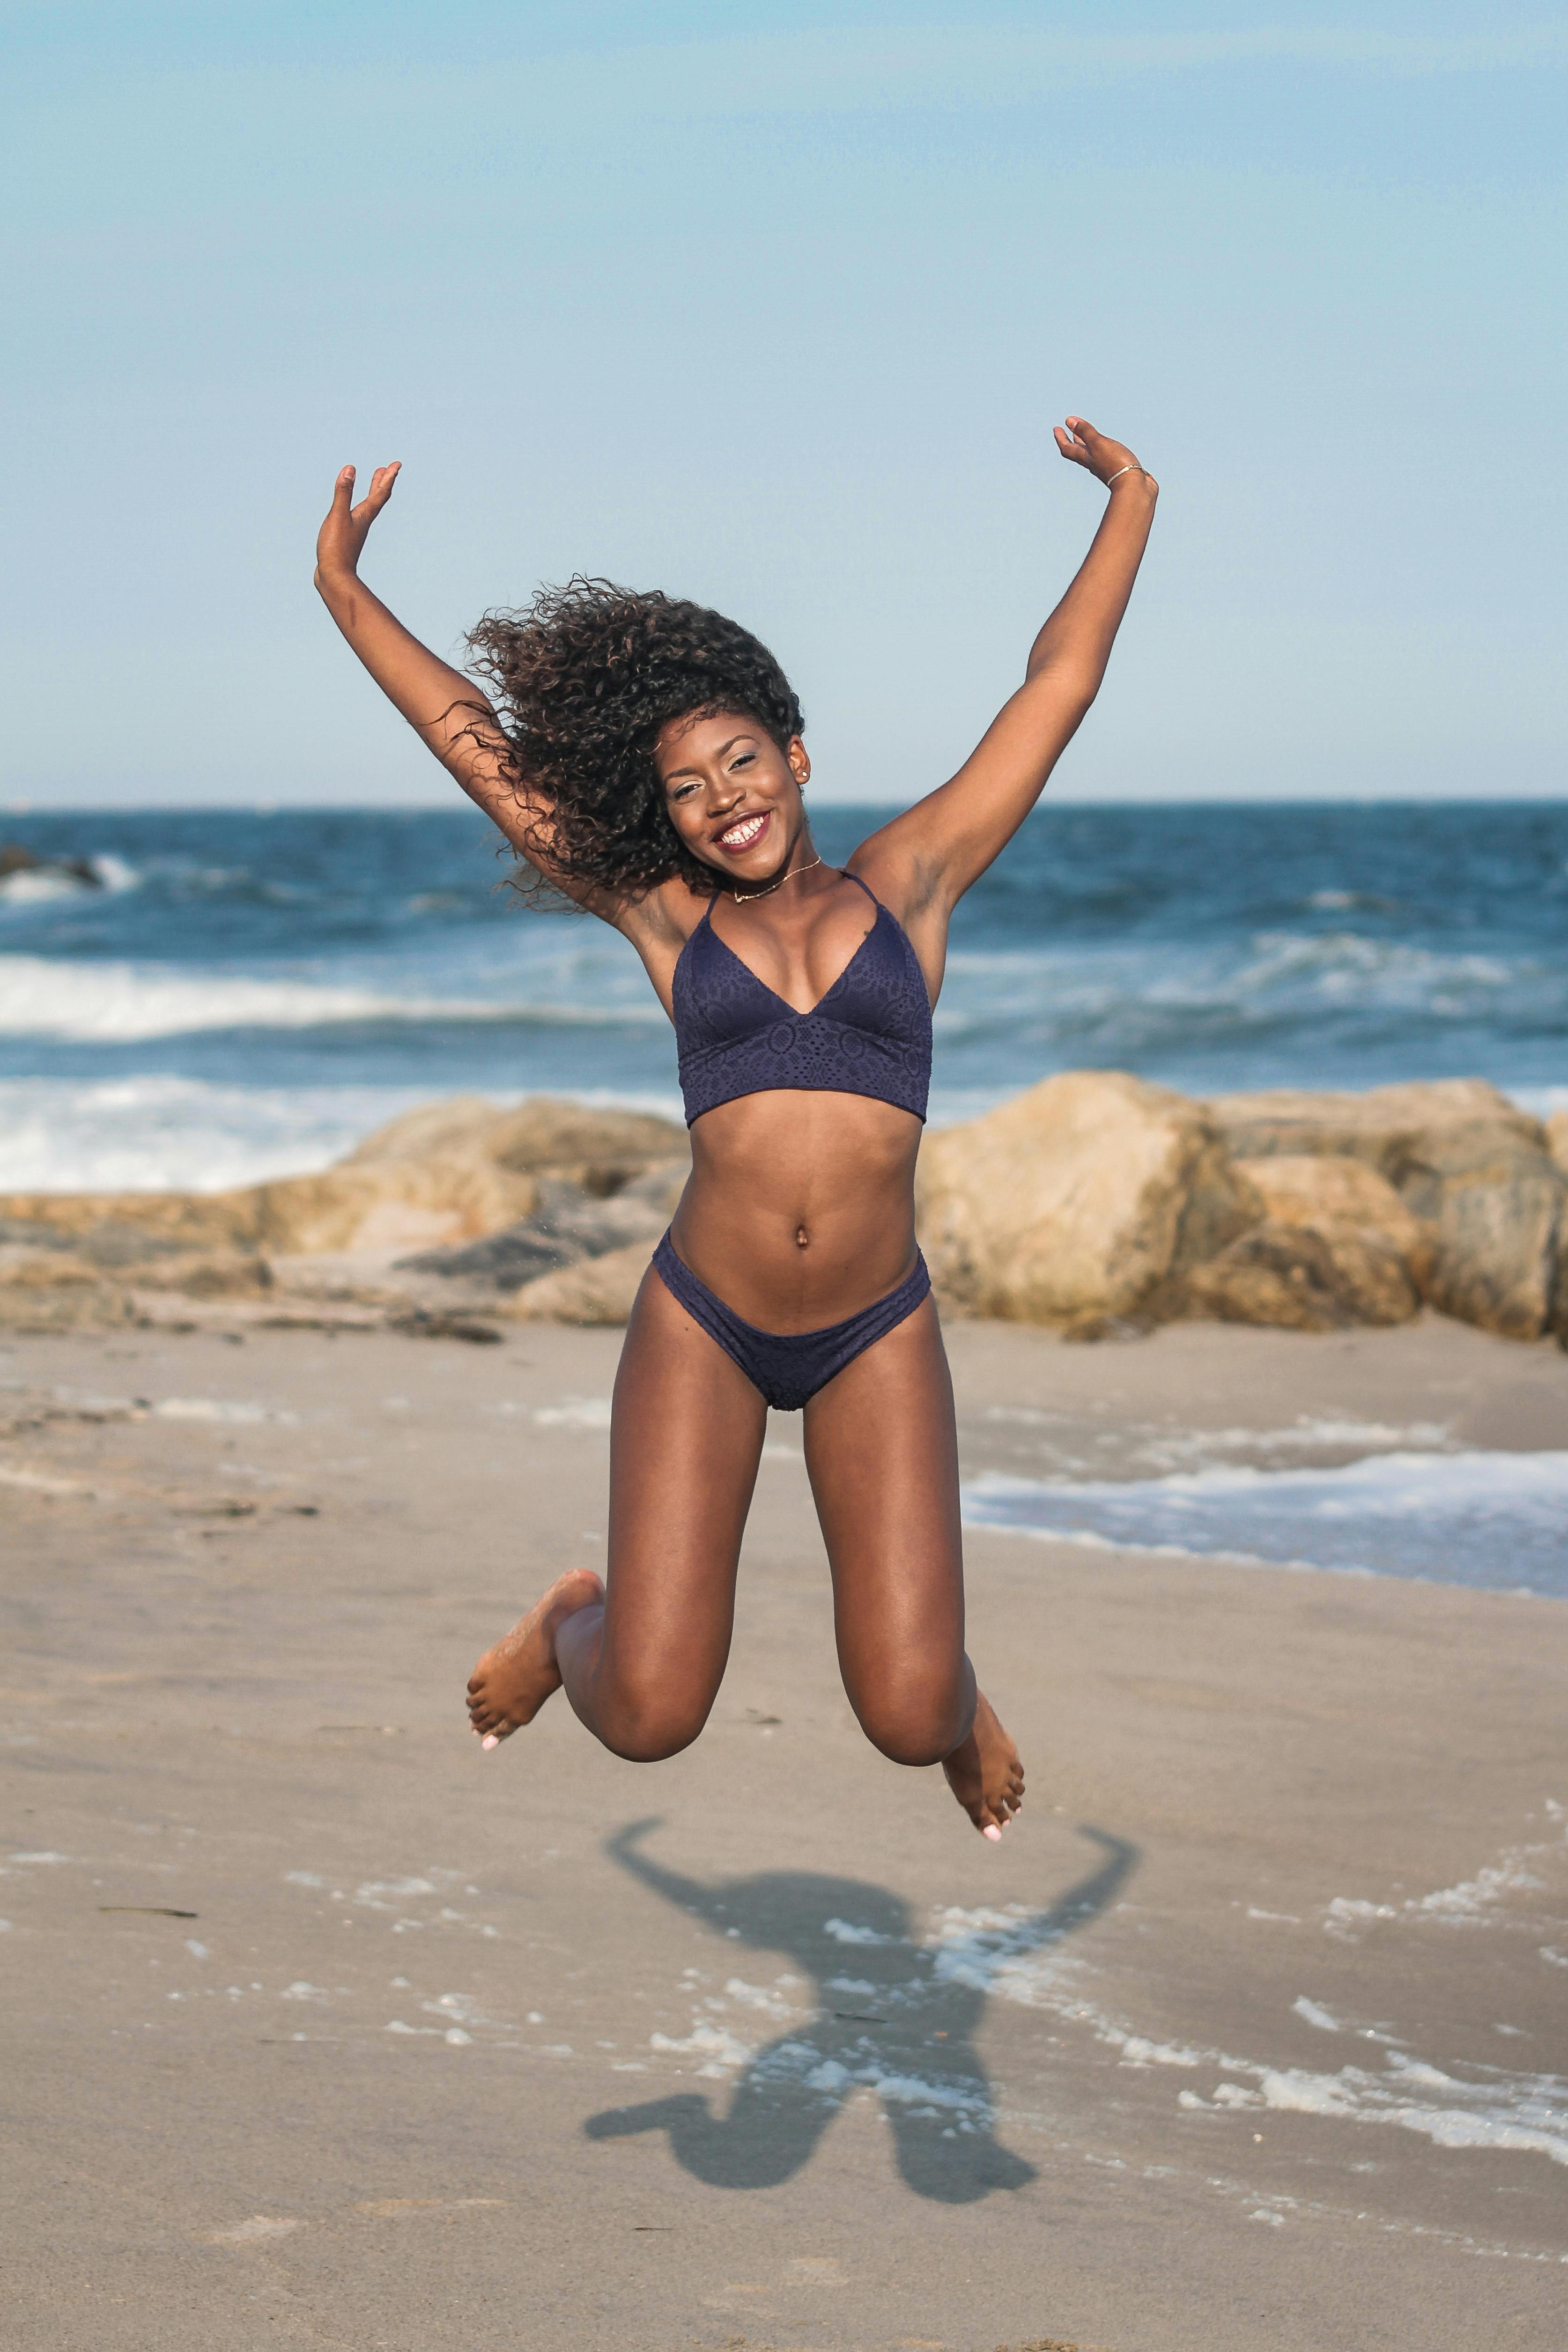 Bikini Photos, Download The BEST Free Bikini Stock Photos & HD Images